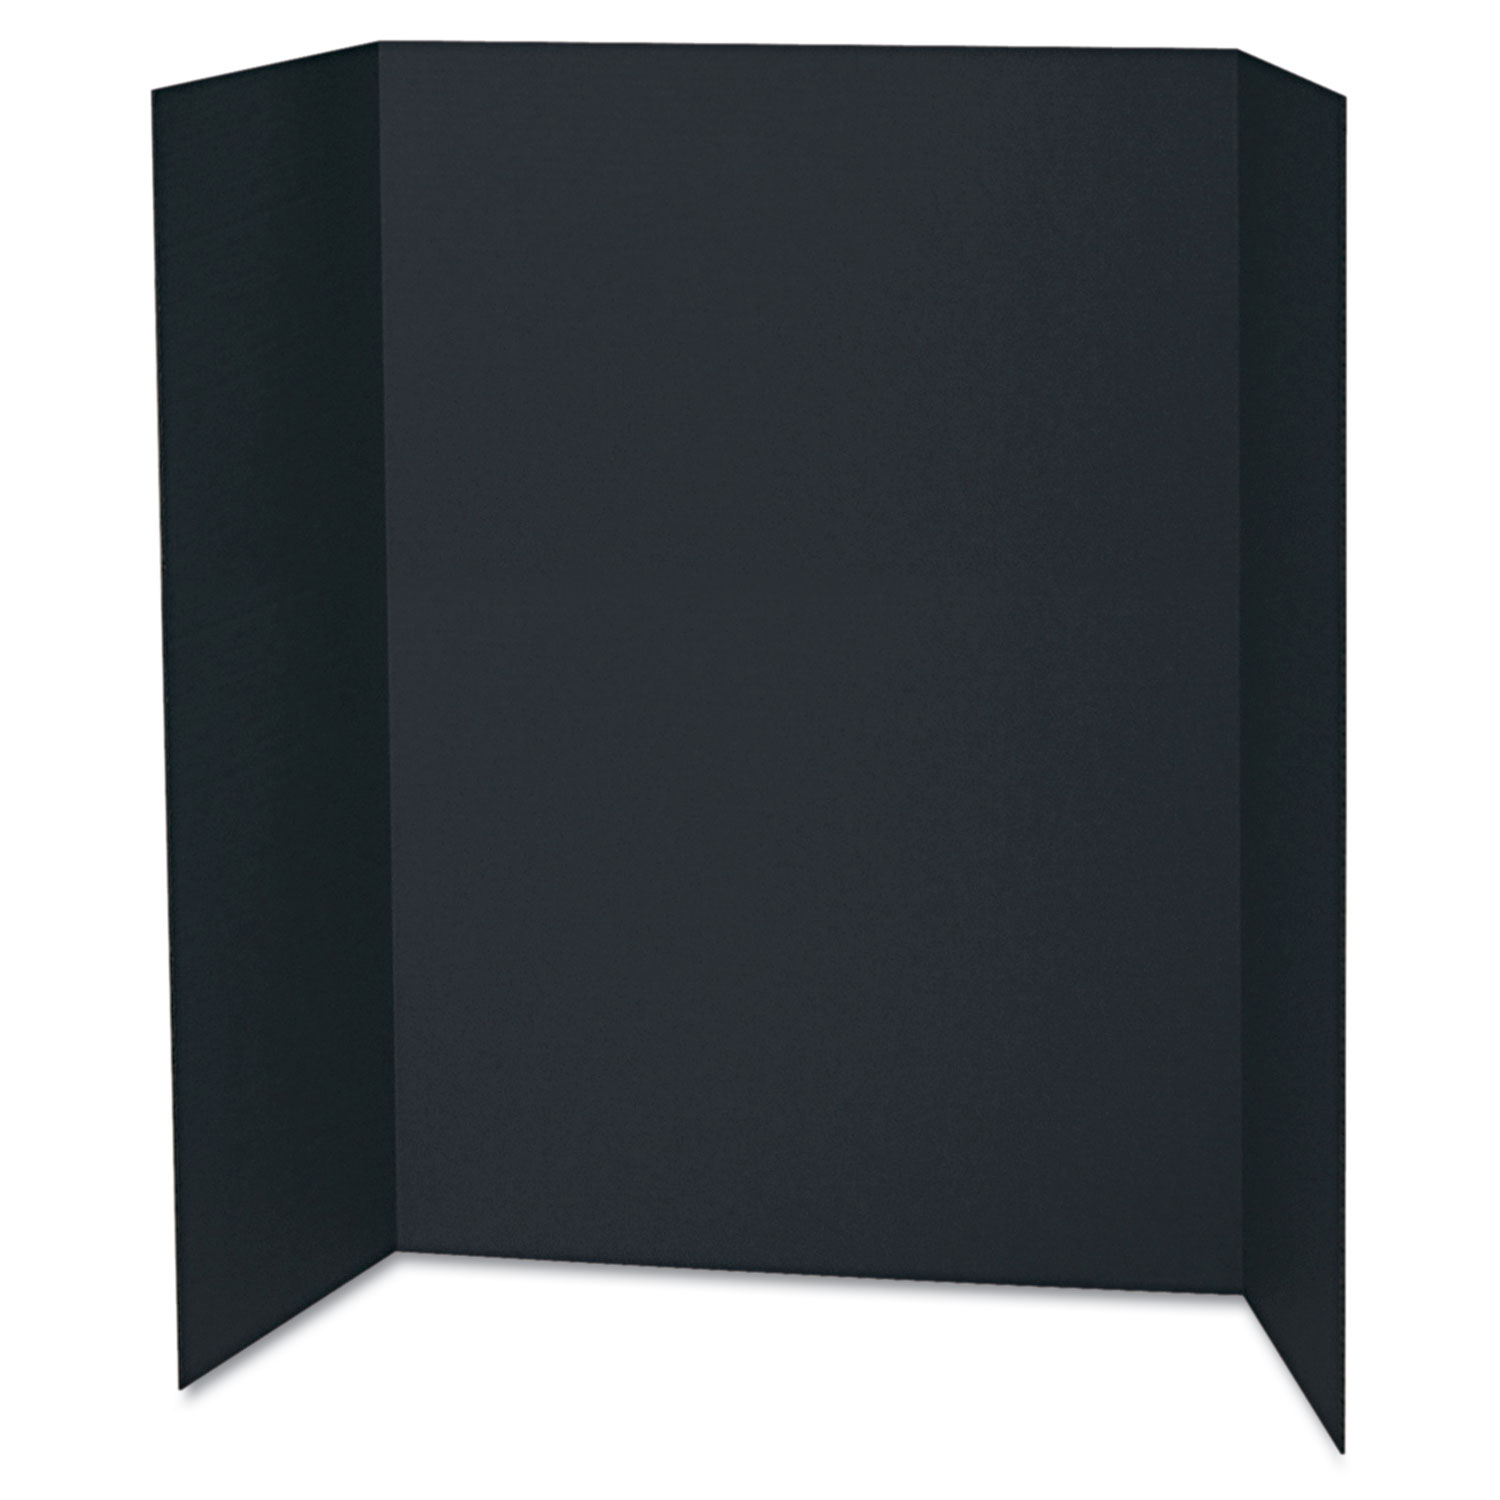  Pacon 3766 Spotlight Corrugated Presentation Display Boards, 48 x 36, Black, 24/Carton (PAC3766) 